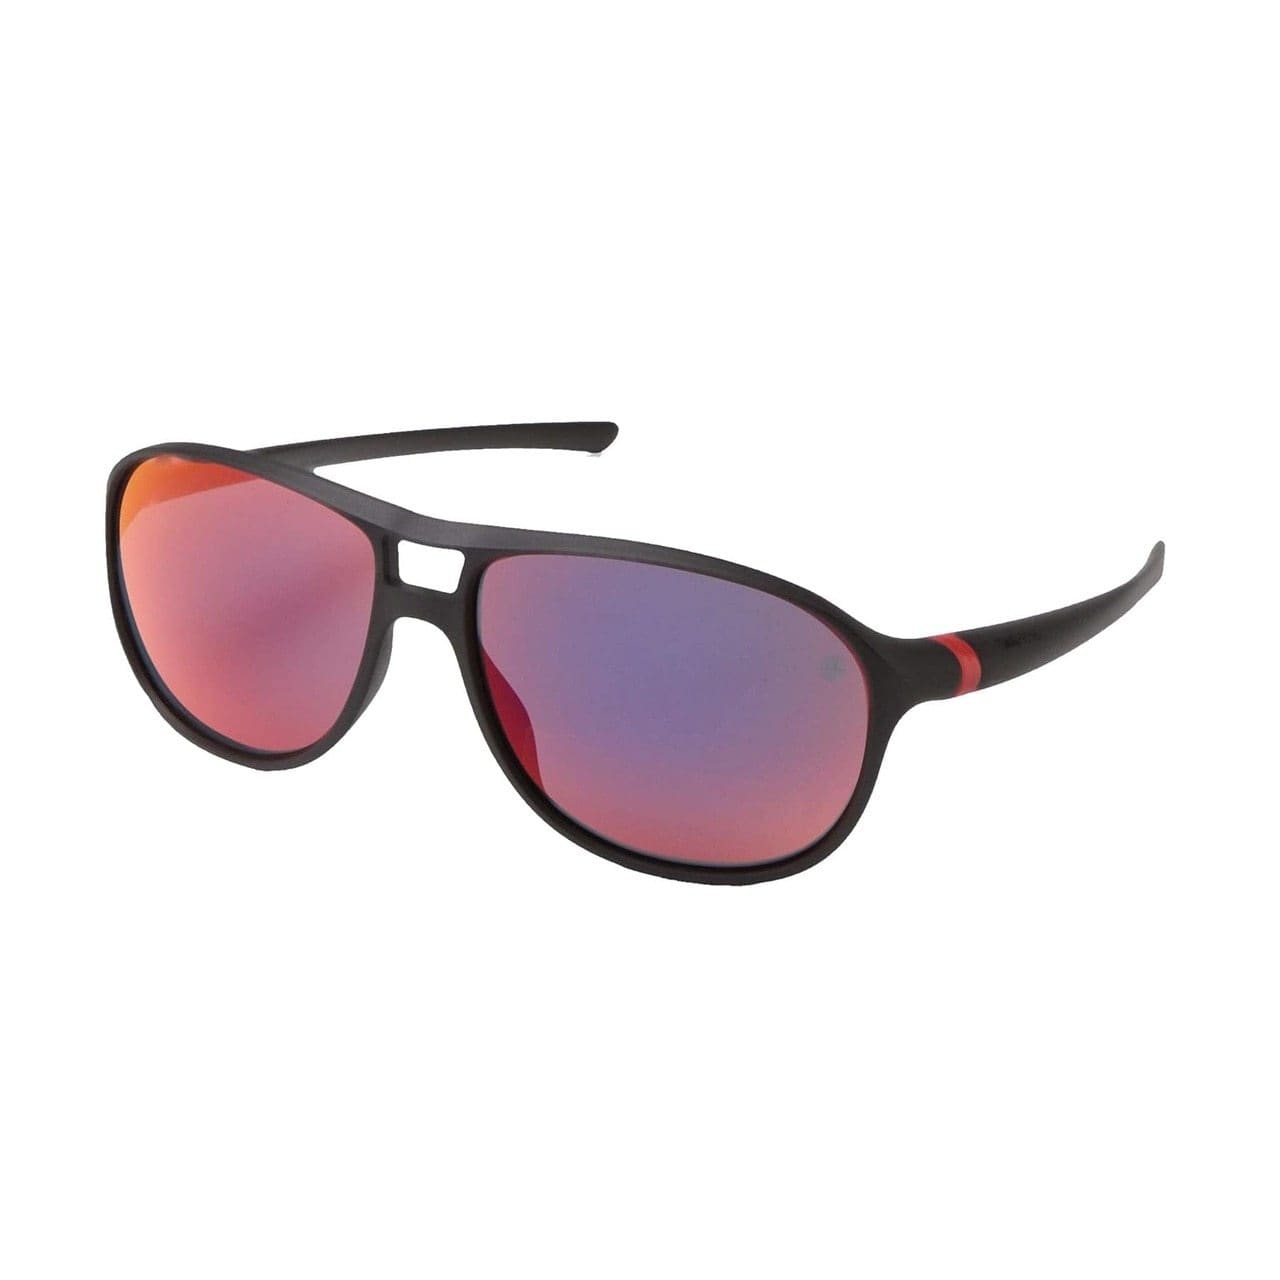 TAG Heuer 6043-113 27 Degree Urban Black Red Aviator Chrome Red Lens Sunglasses 818225834320